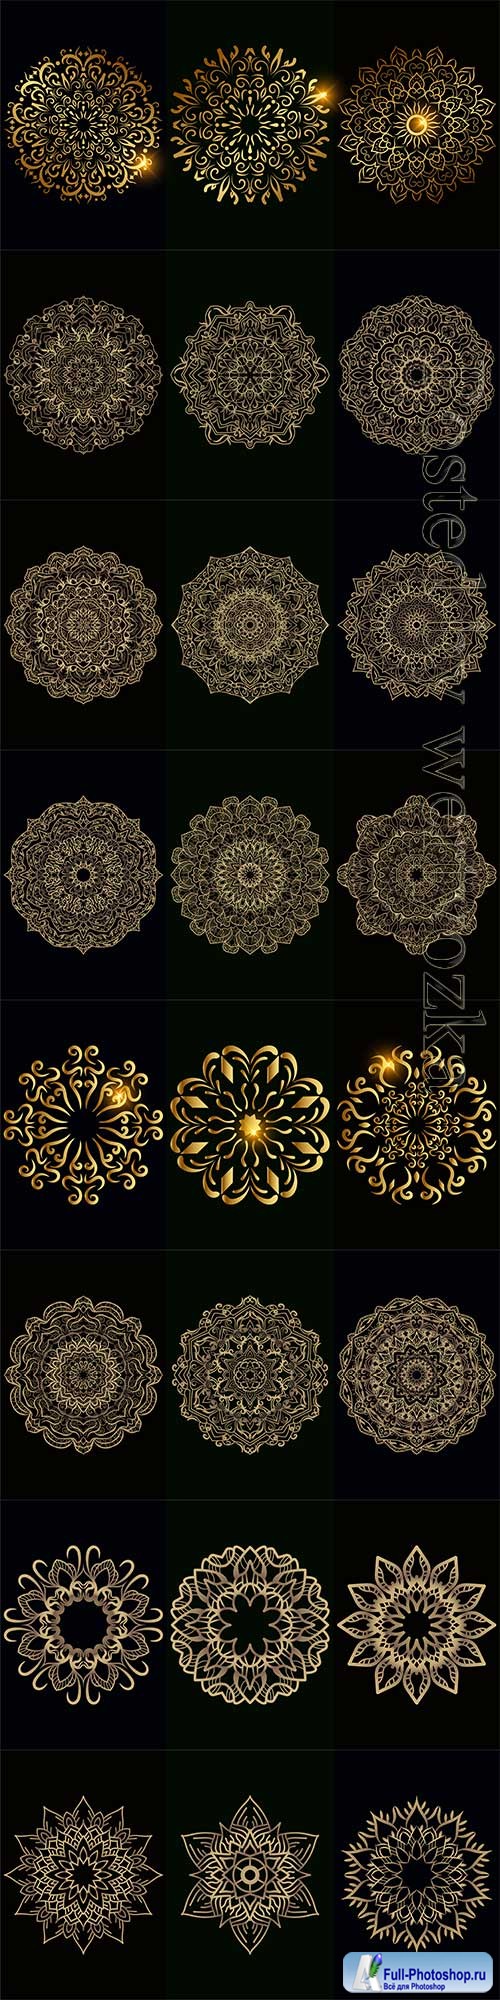 Mandala ornament or flower background design set